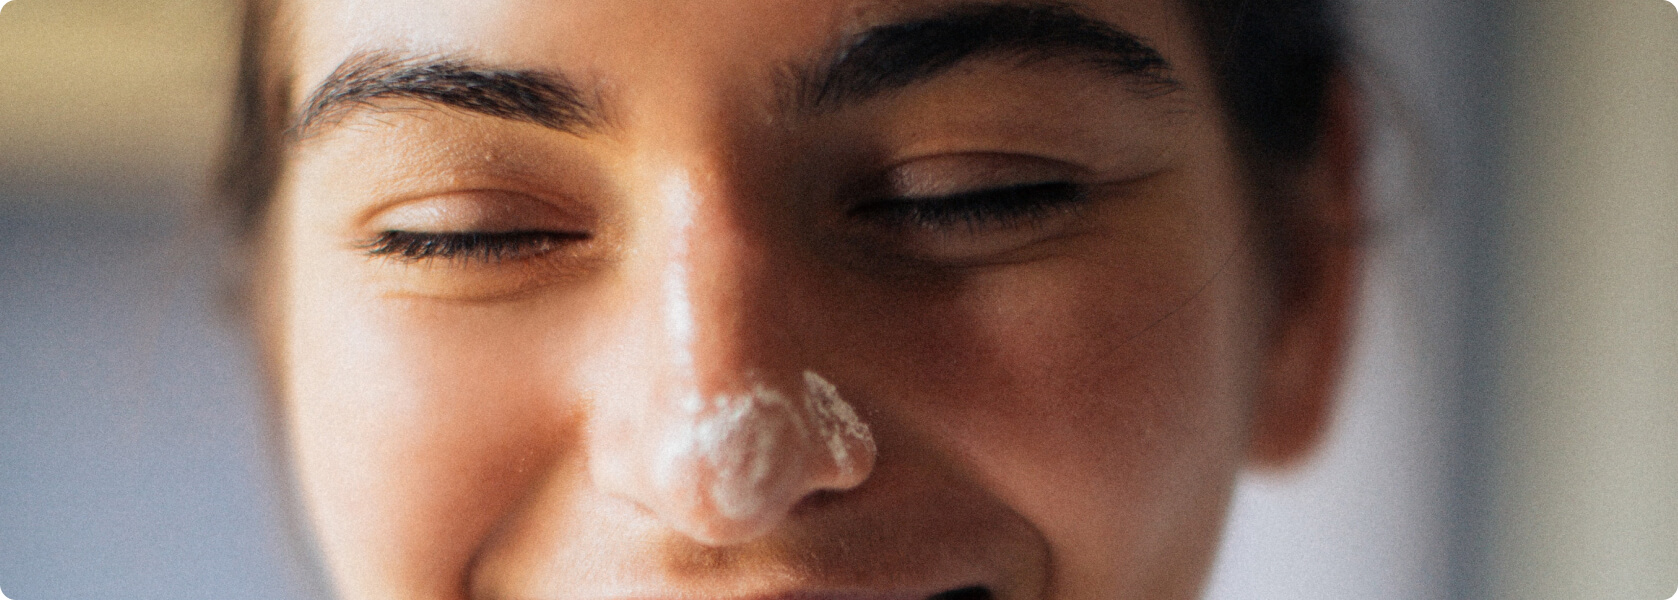 Nasenspitzenkorrektur - Was versteht die Medizin unter einer Nasenspitzenkorrektur?